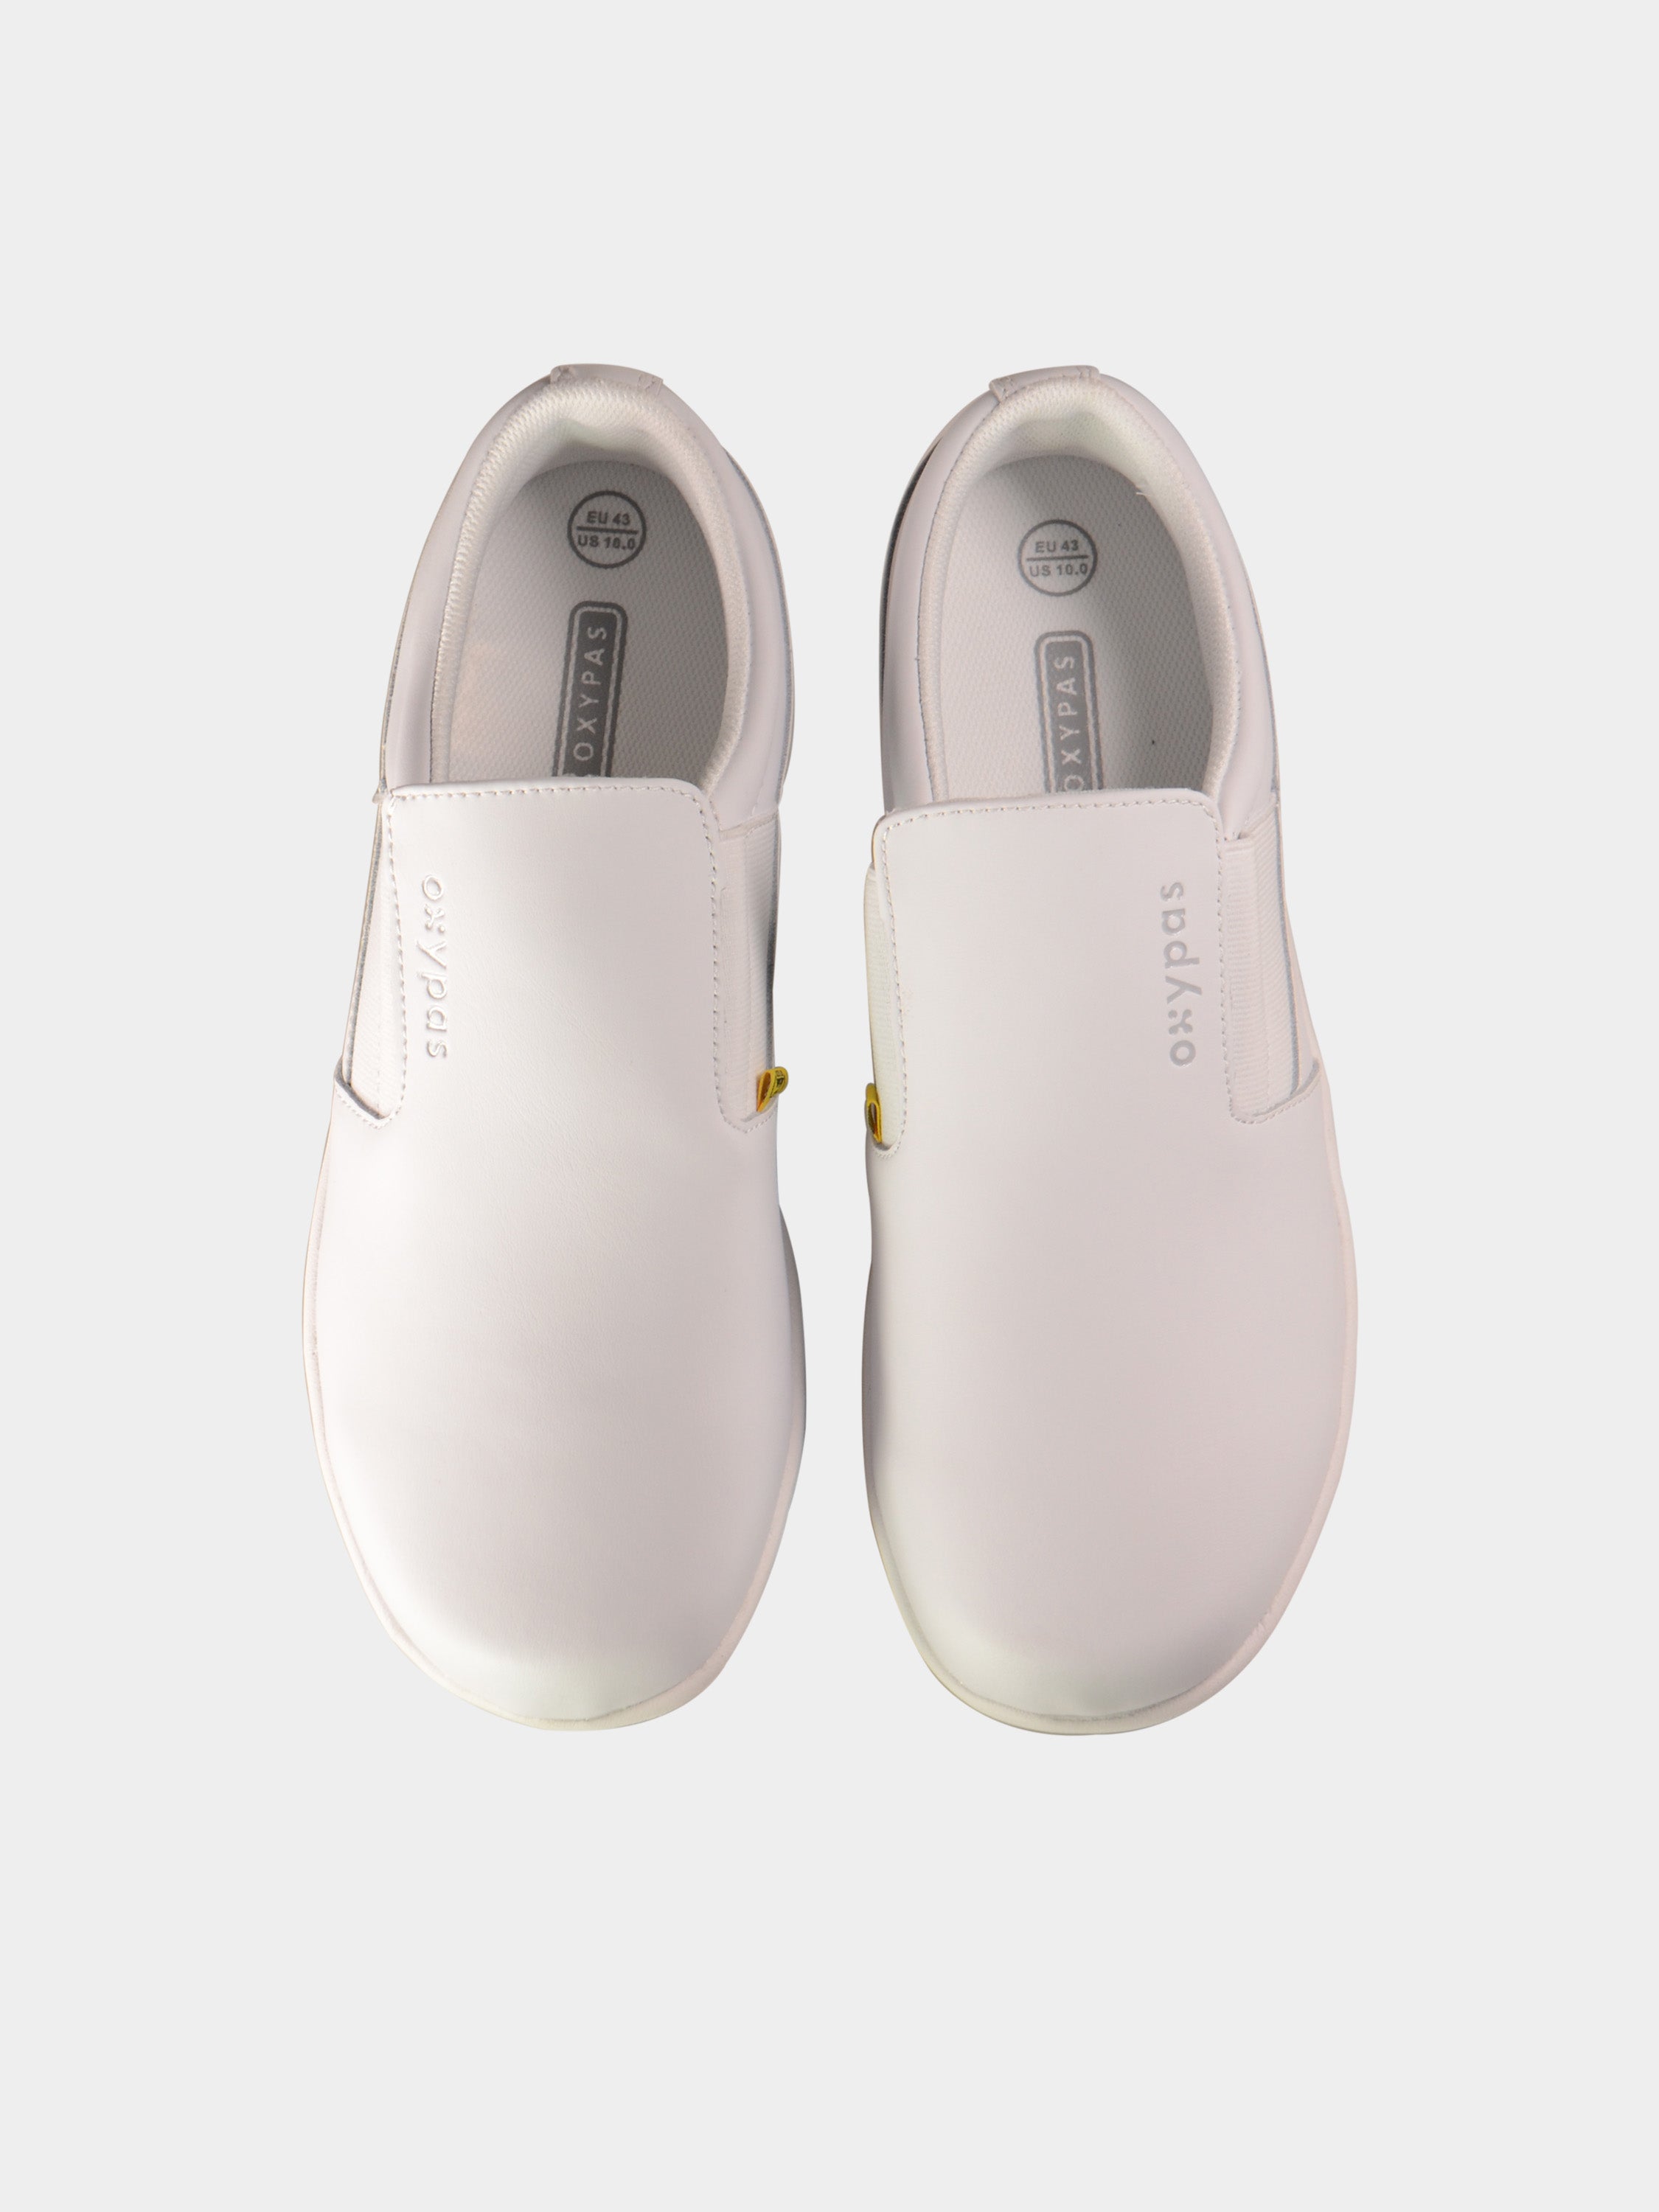 Oxypas Men Roy Safety Shoes #color_White